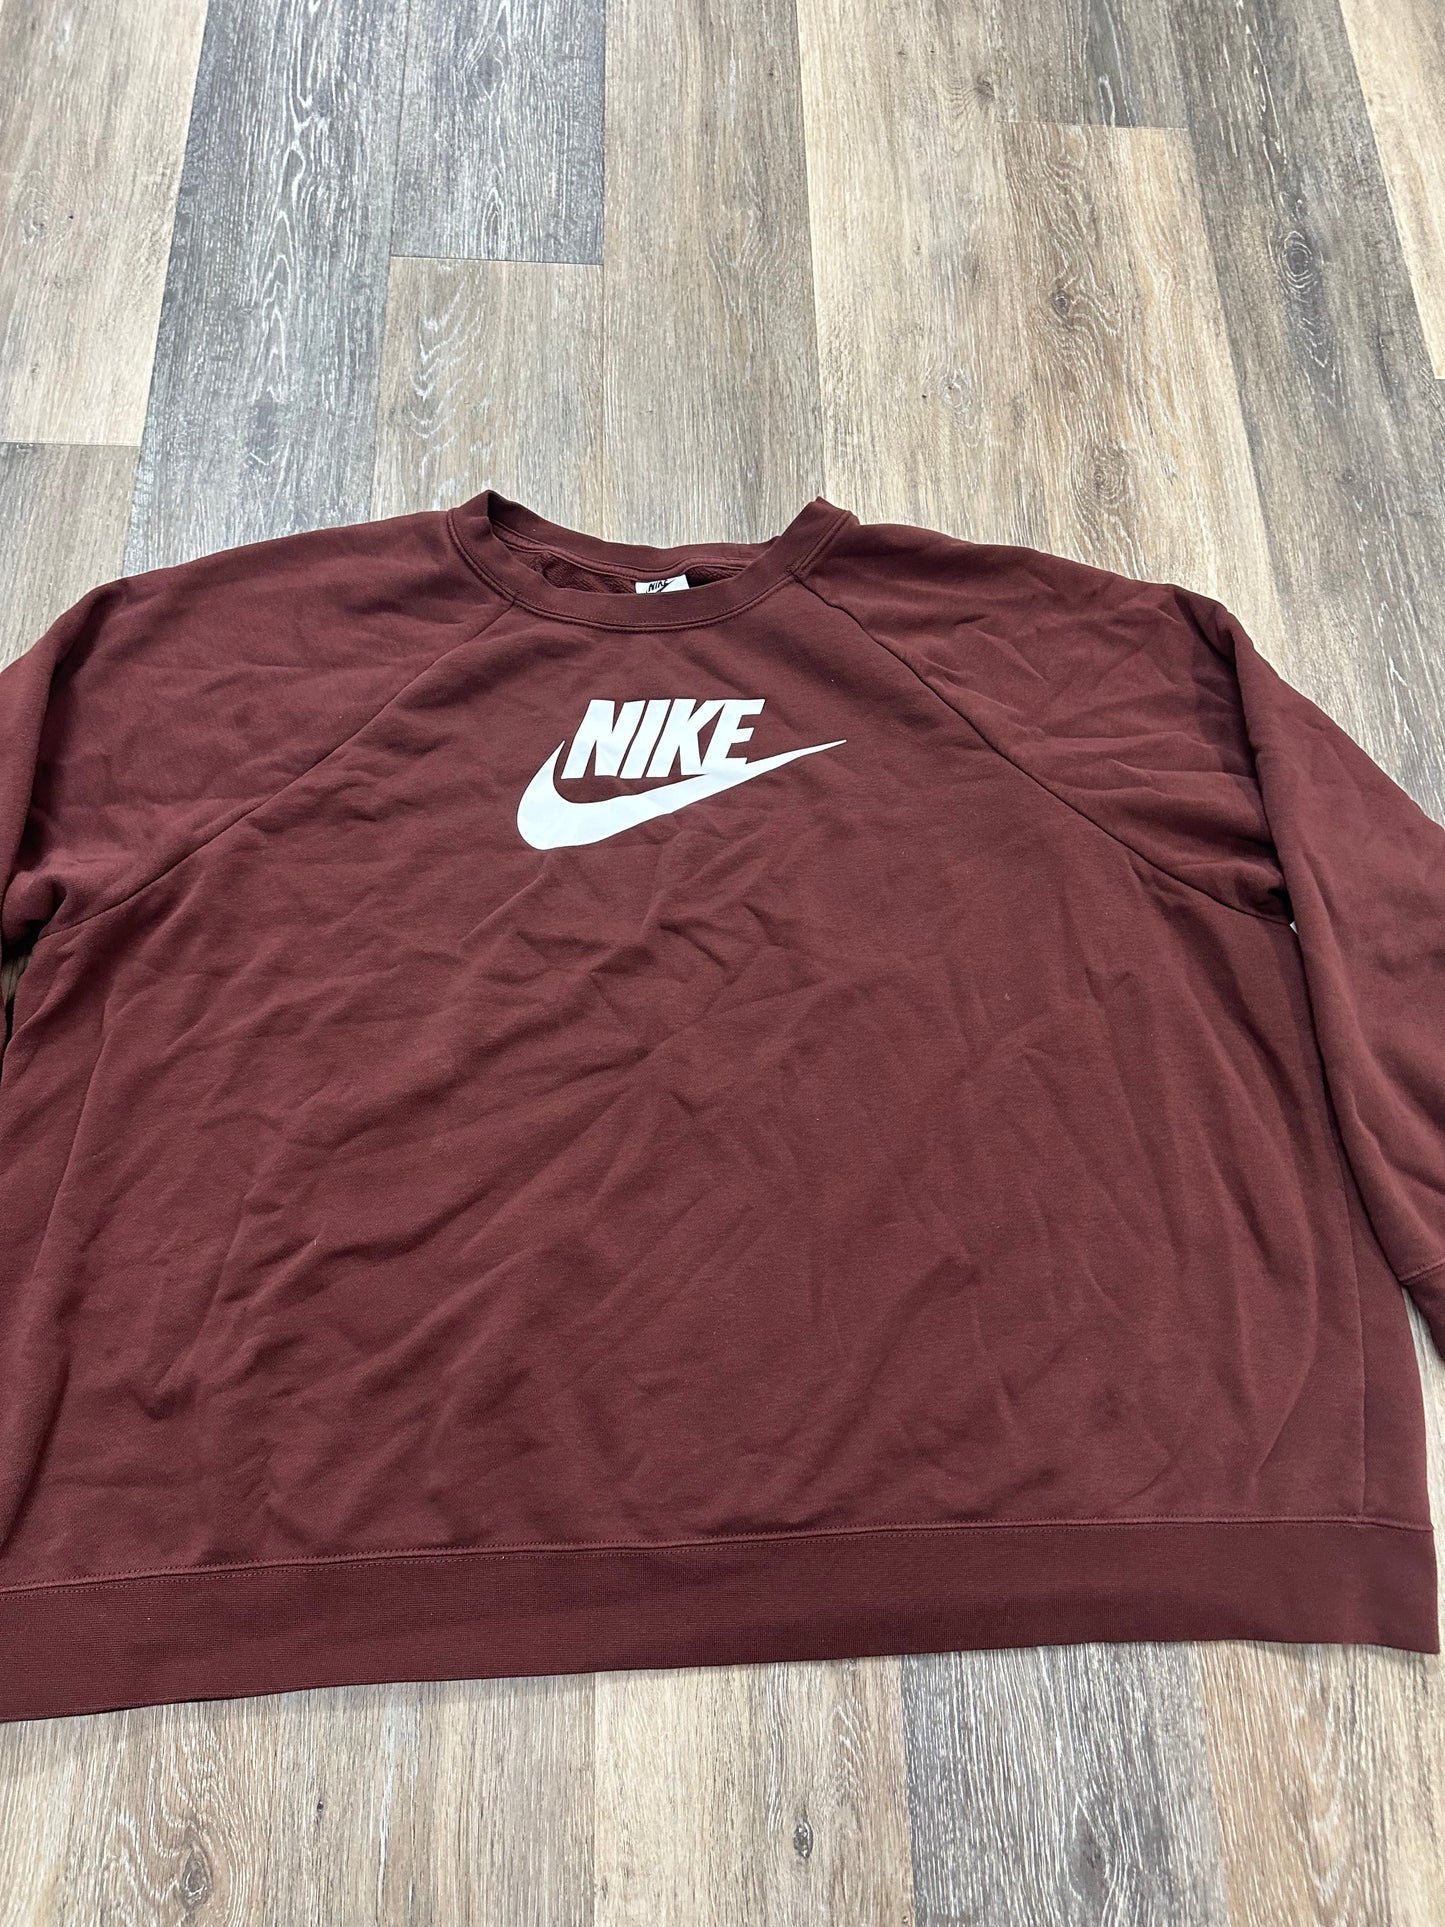 Sweatshirt Crewneck By Nike Apparel  Size: 3x